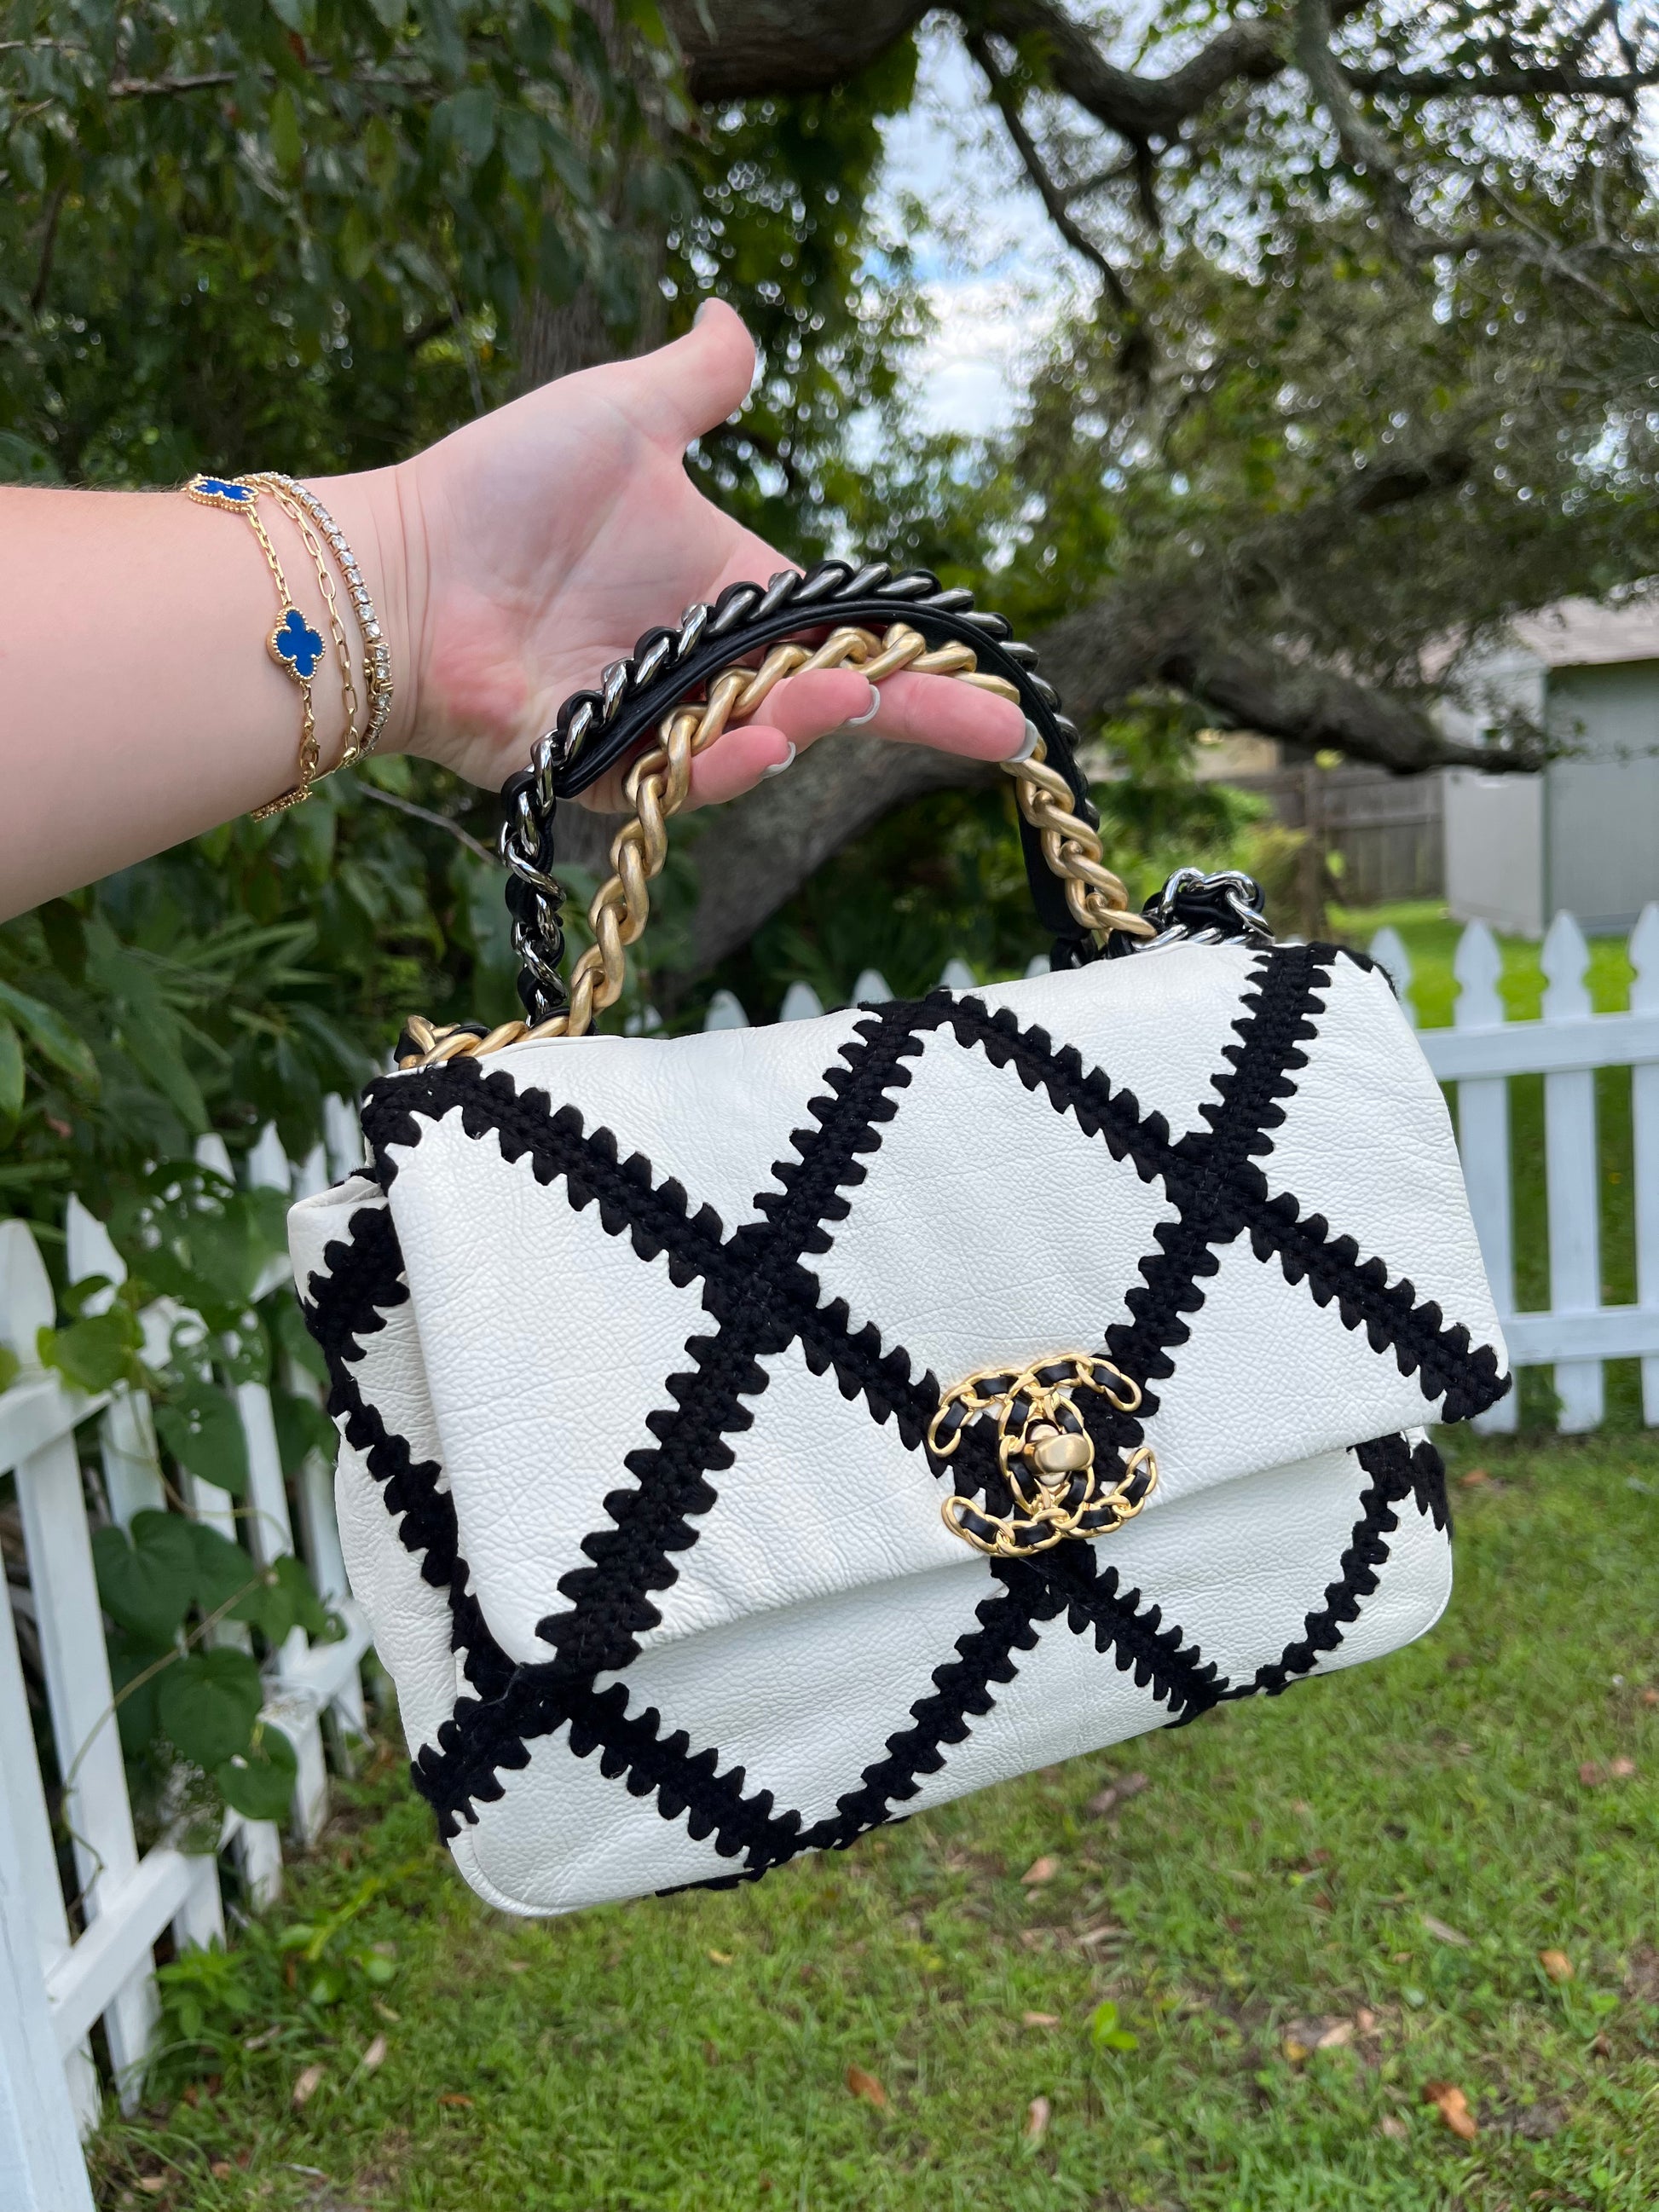 Chanel Cotton Crochet 19 Bag